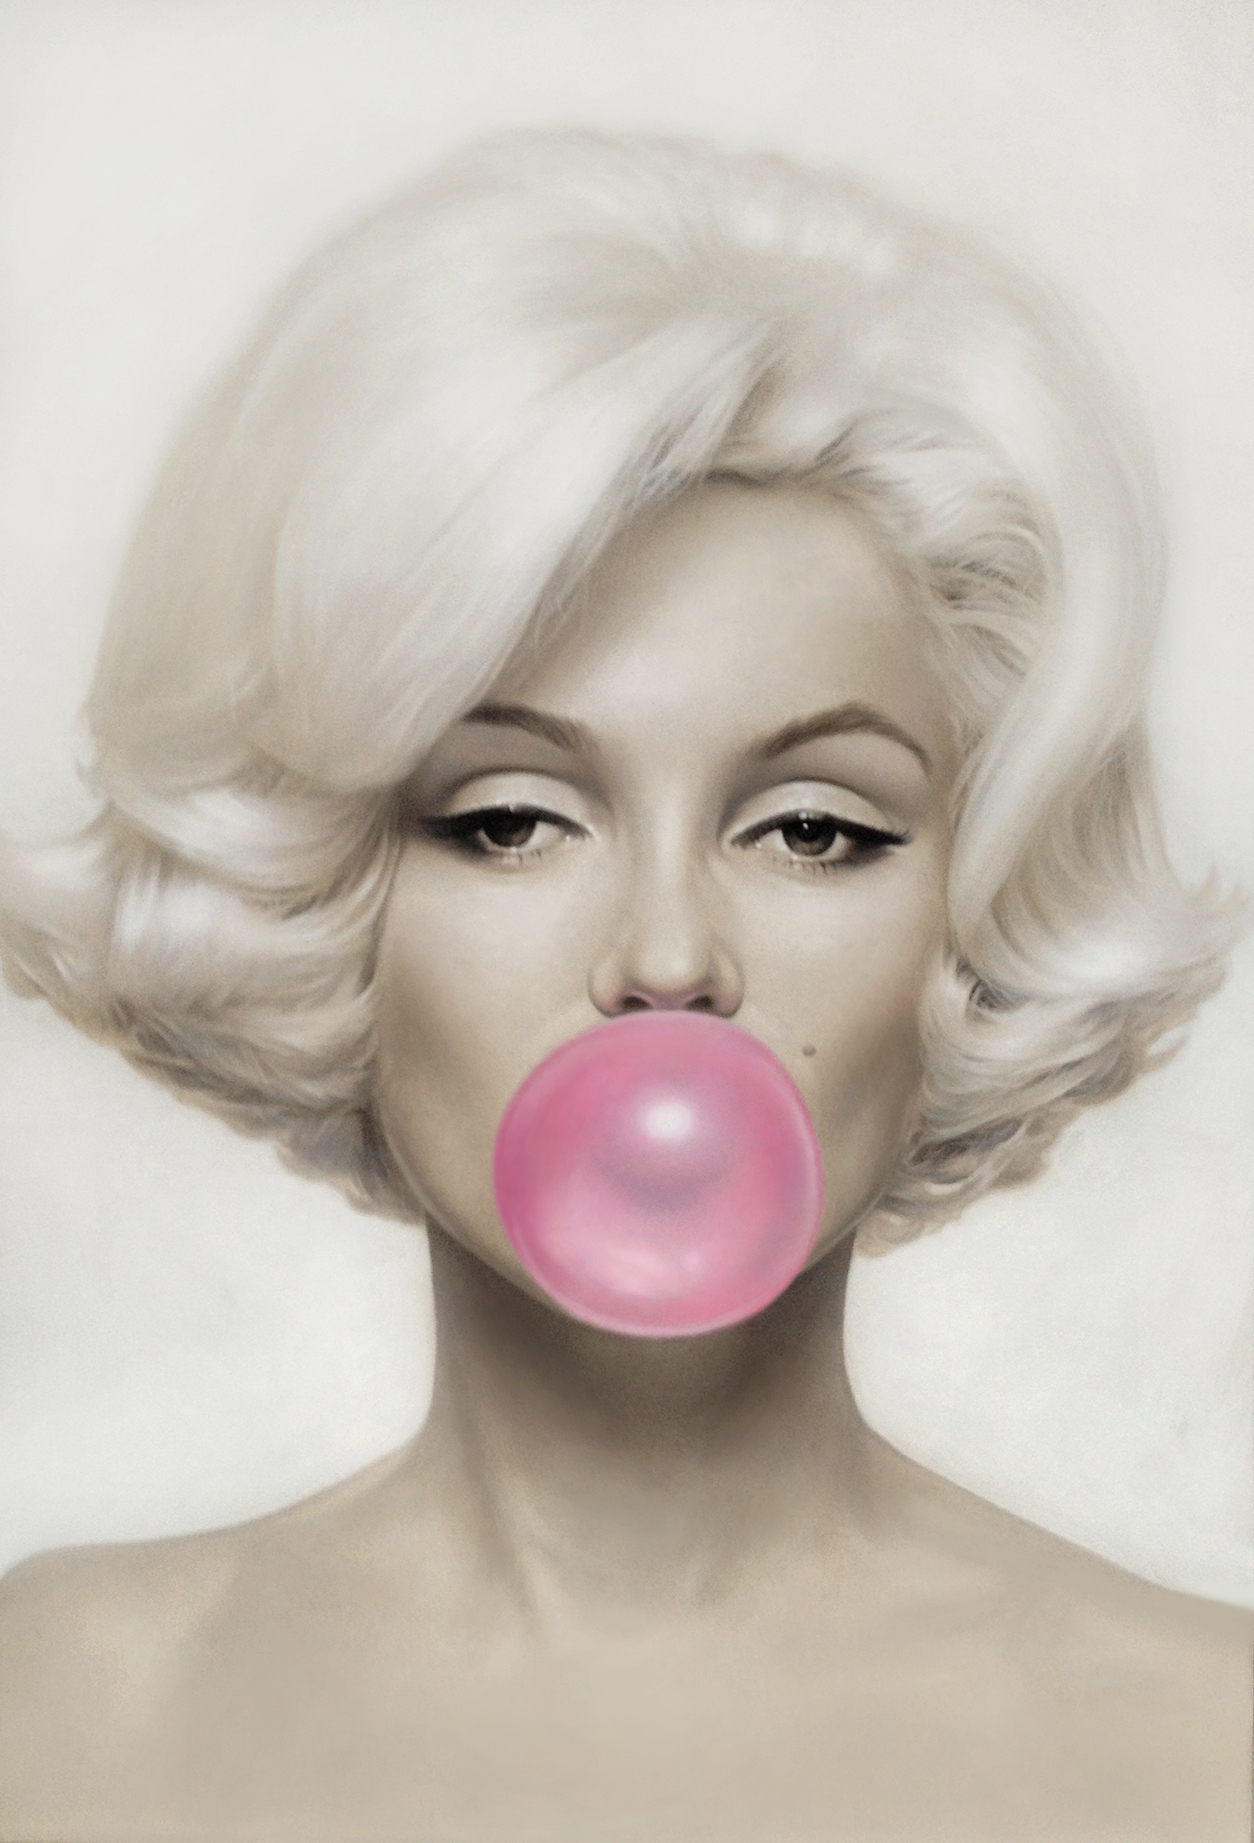 Cool Art: Pink Bubble Gum - Michael Moebius ... |